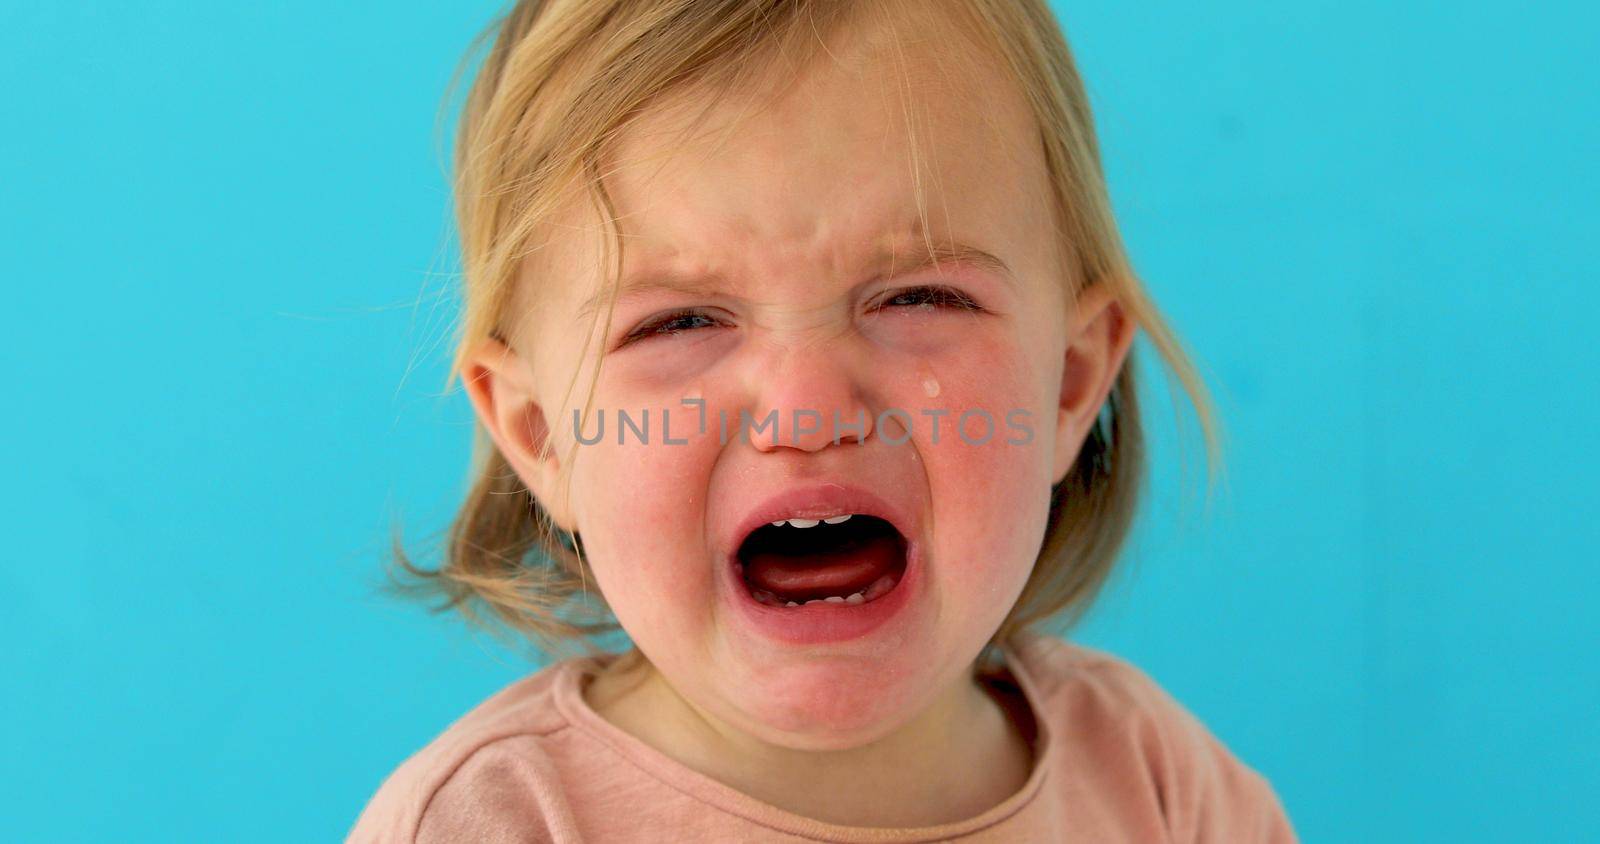 One-year-old baby girl cries blue background. Girl has milk teeth growing